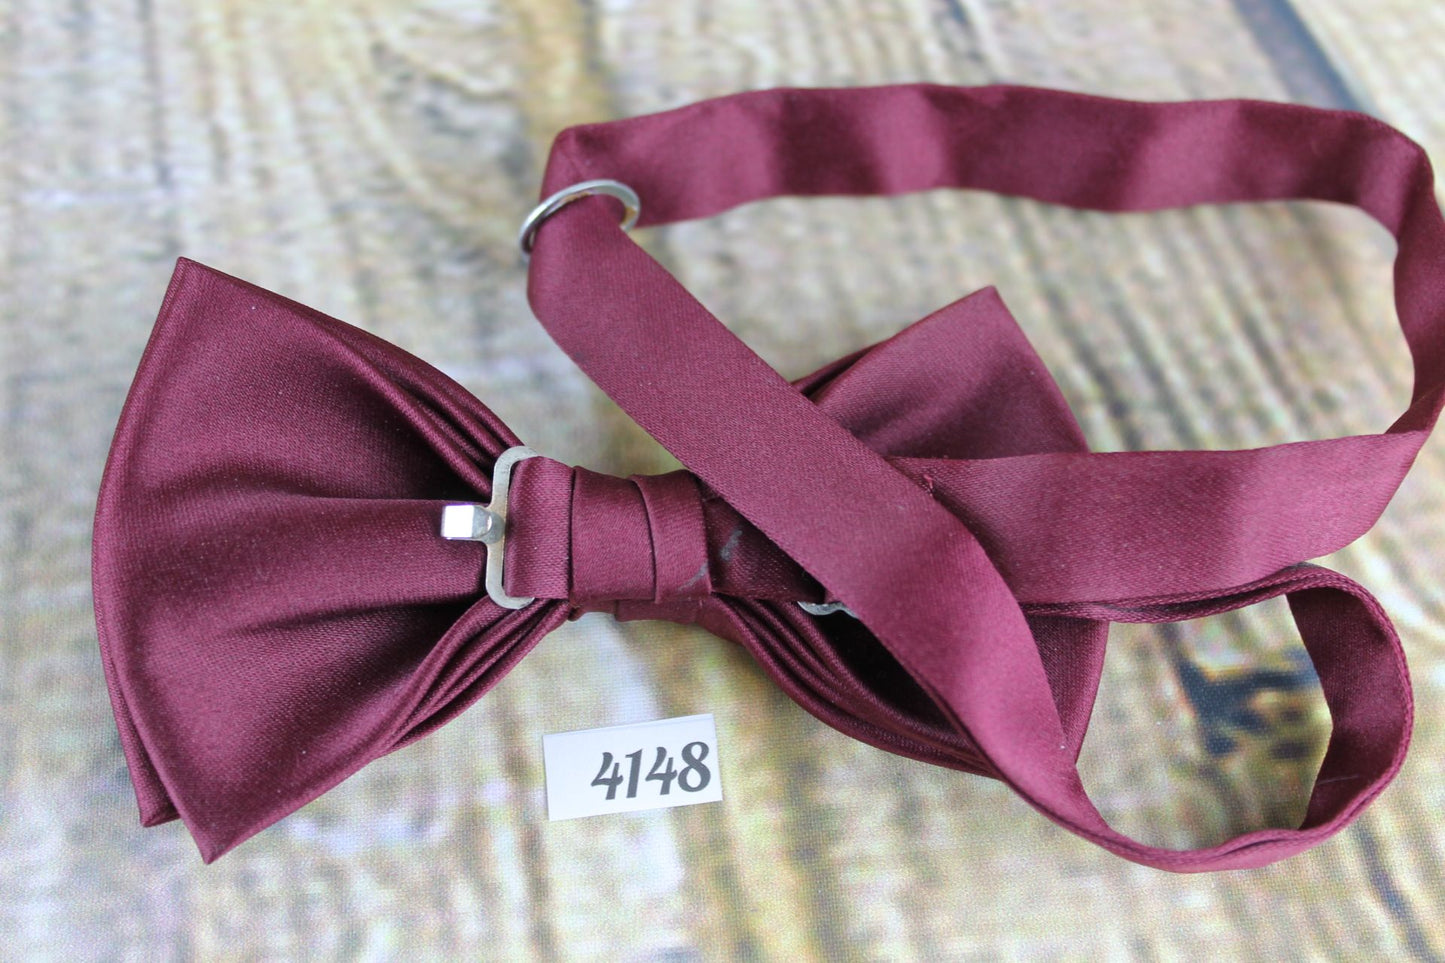 Vintage pre-tied burgundy satin bow tie adjustable